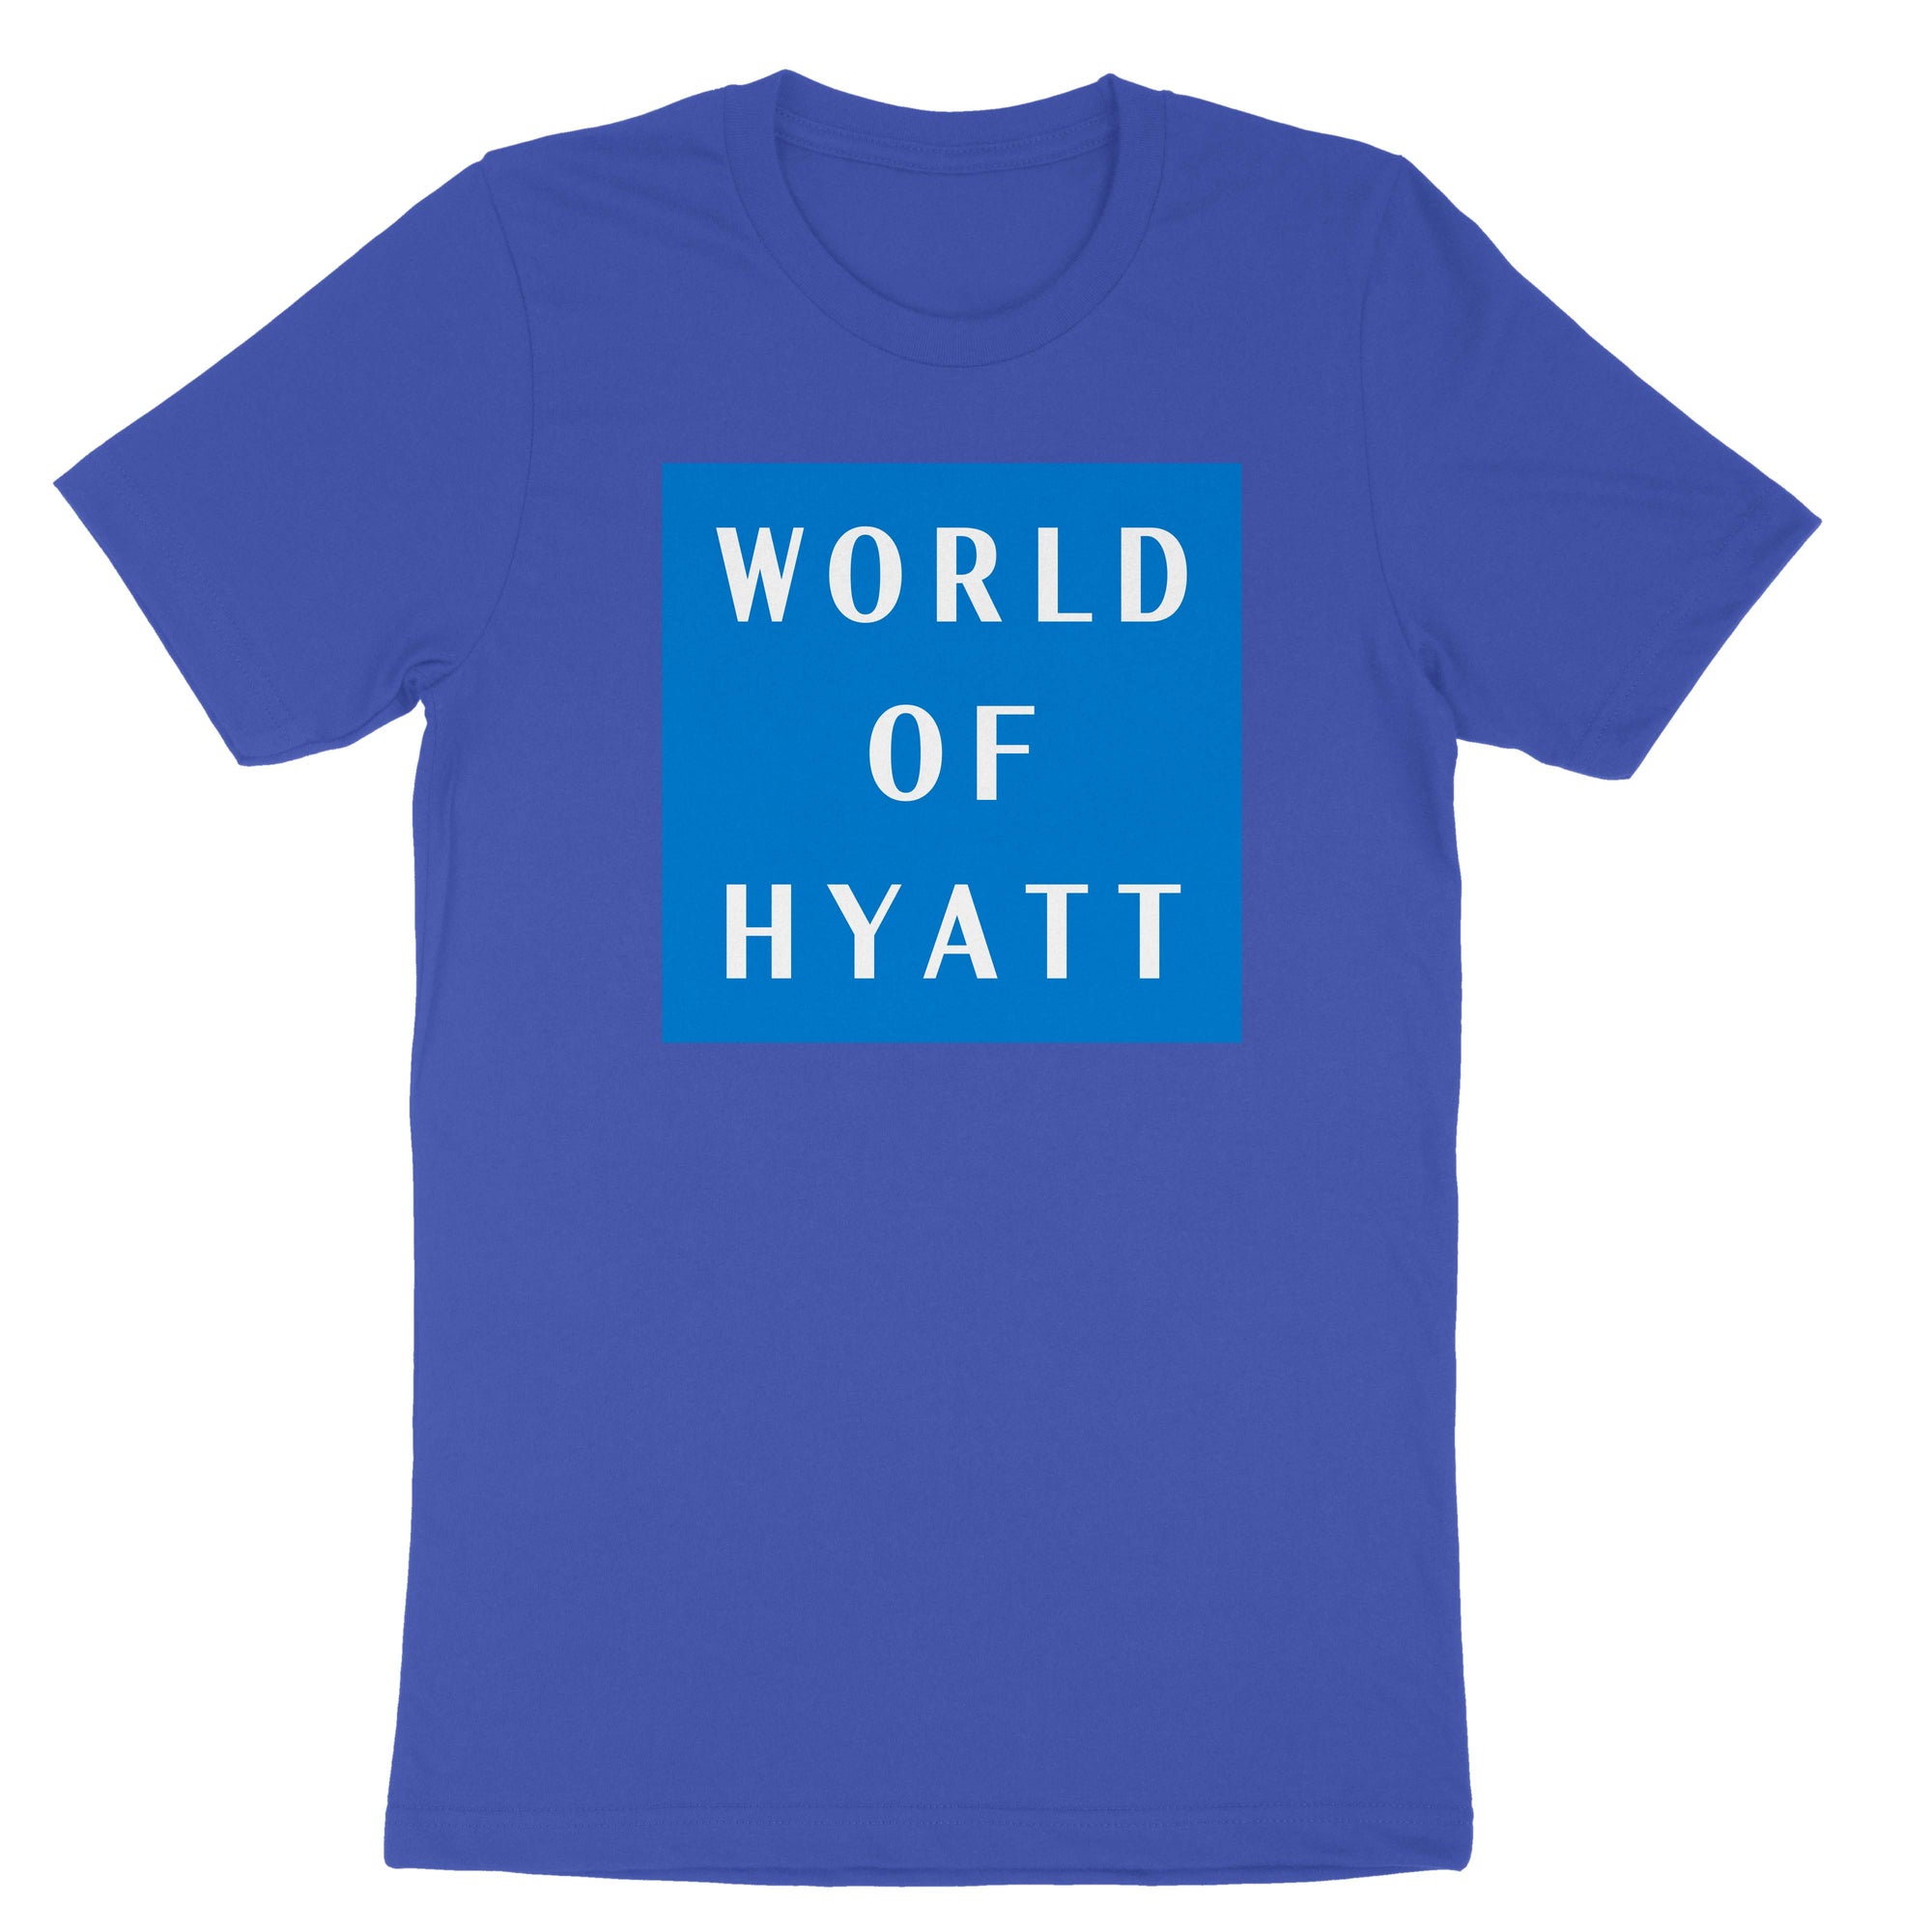 World of Hyatt Volunteer T-Shirt (World of Hyatt, Corporate, Unbound Collection)